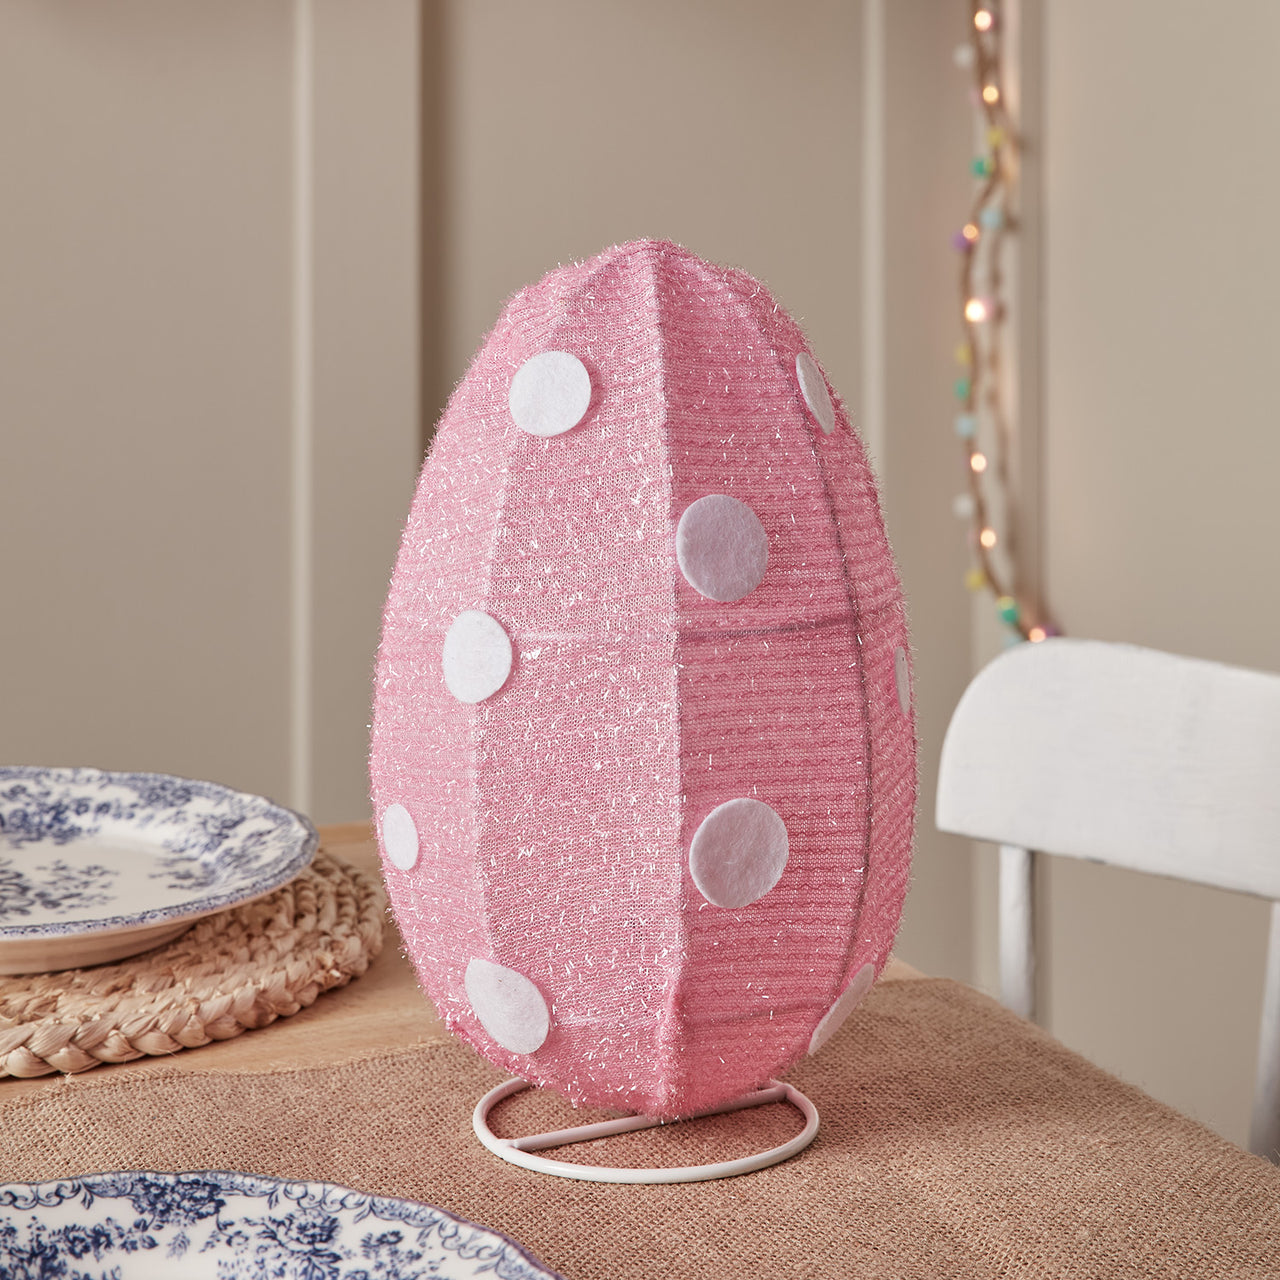 Pink & White Easter Egg Outdoor LED Figure